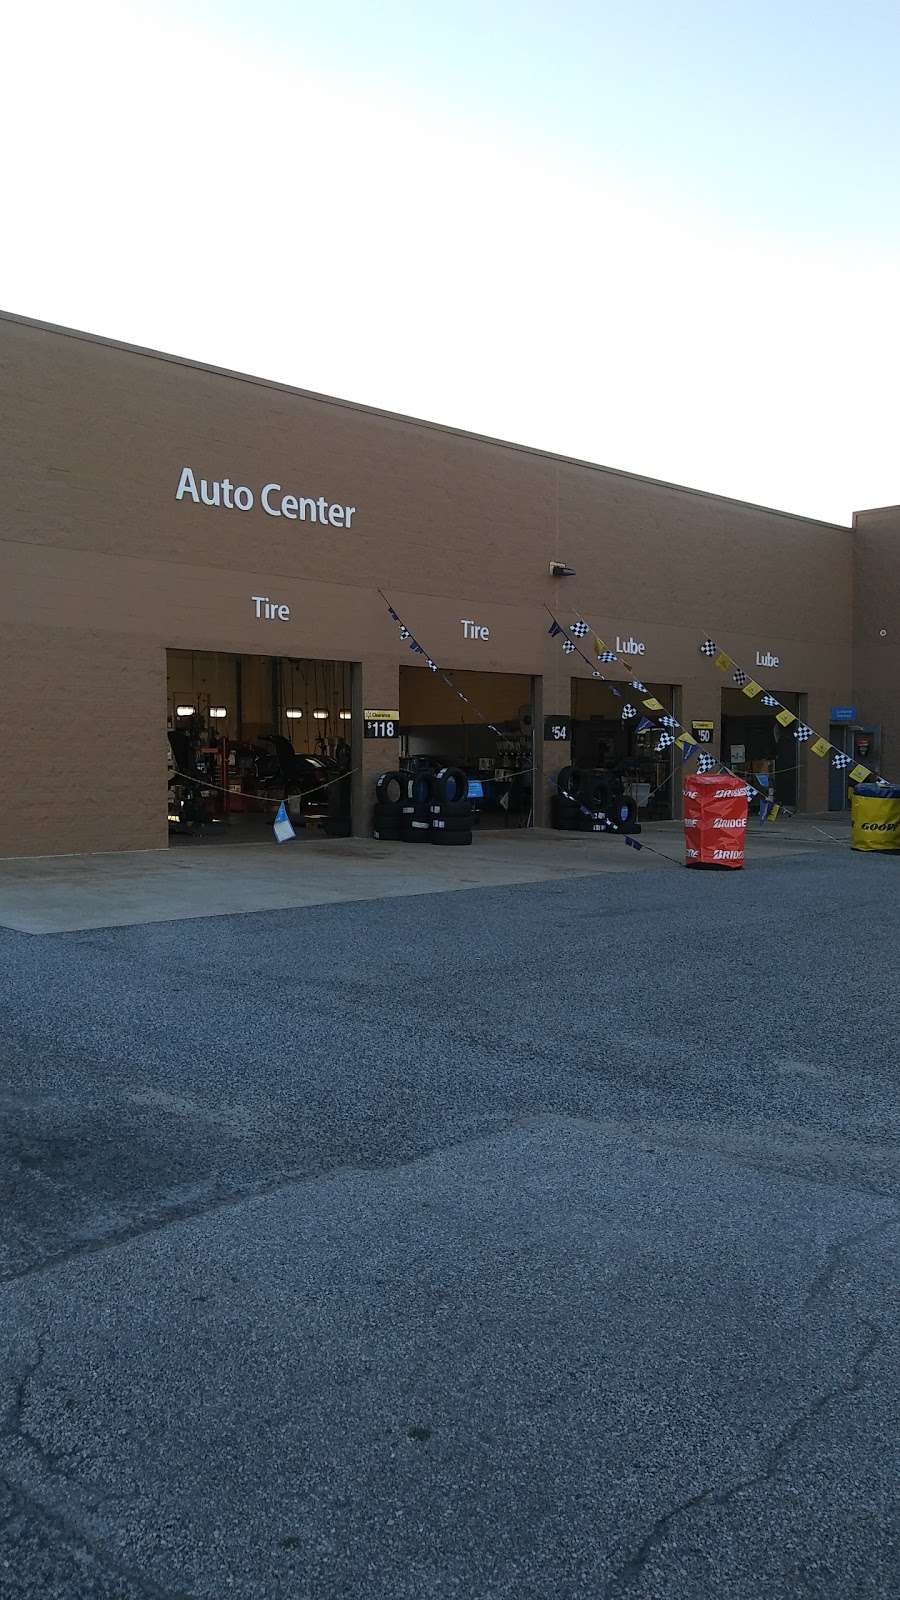 Walmart Auto Care Centers | 150 W El Dorado Blvd, Friendswood, TX 77546, USA | Phone: (281) 480-6177